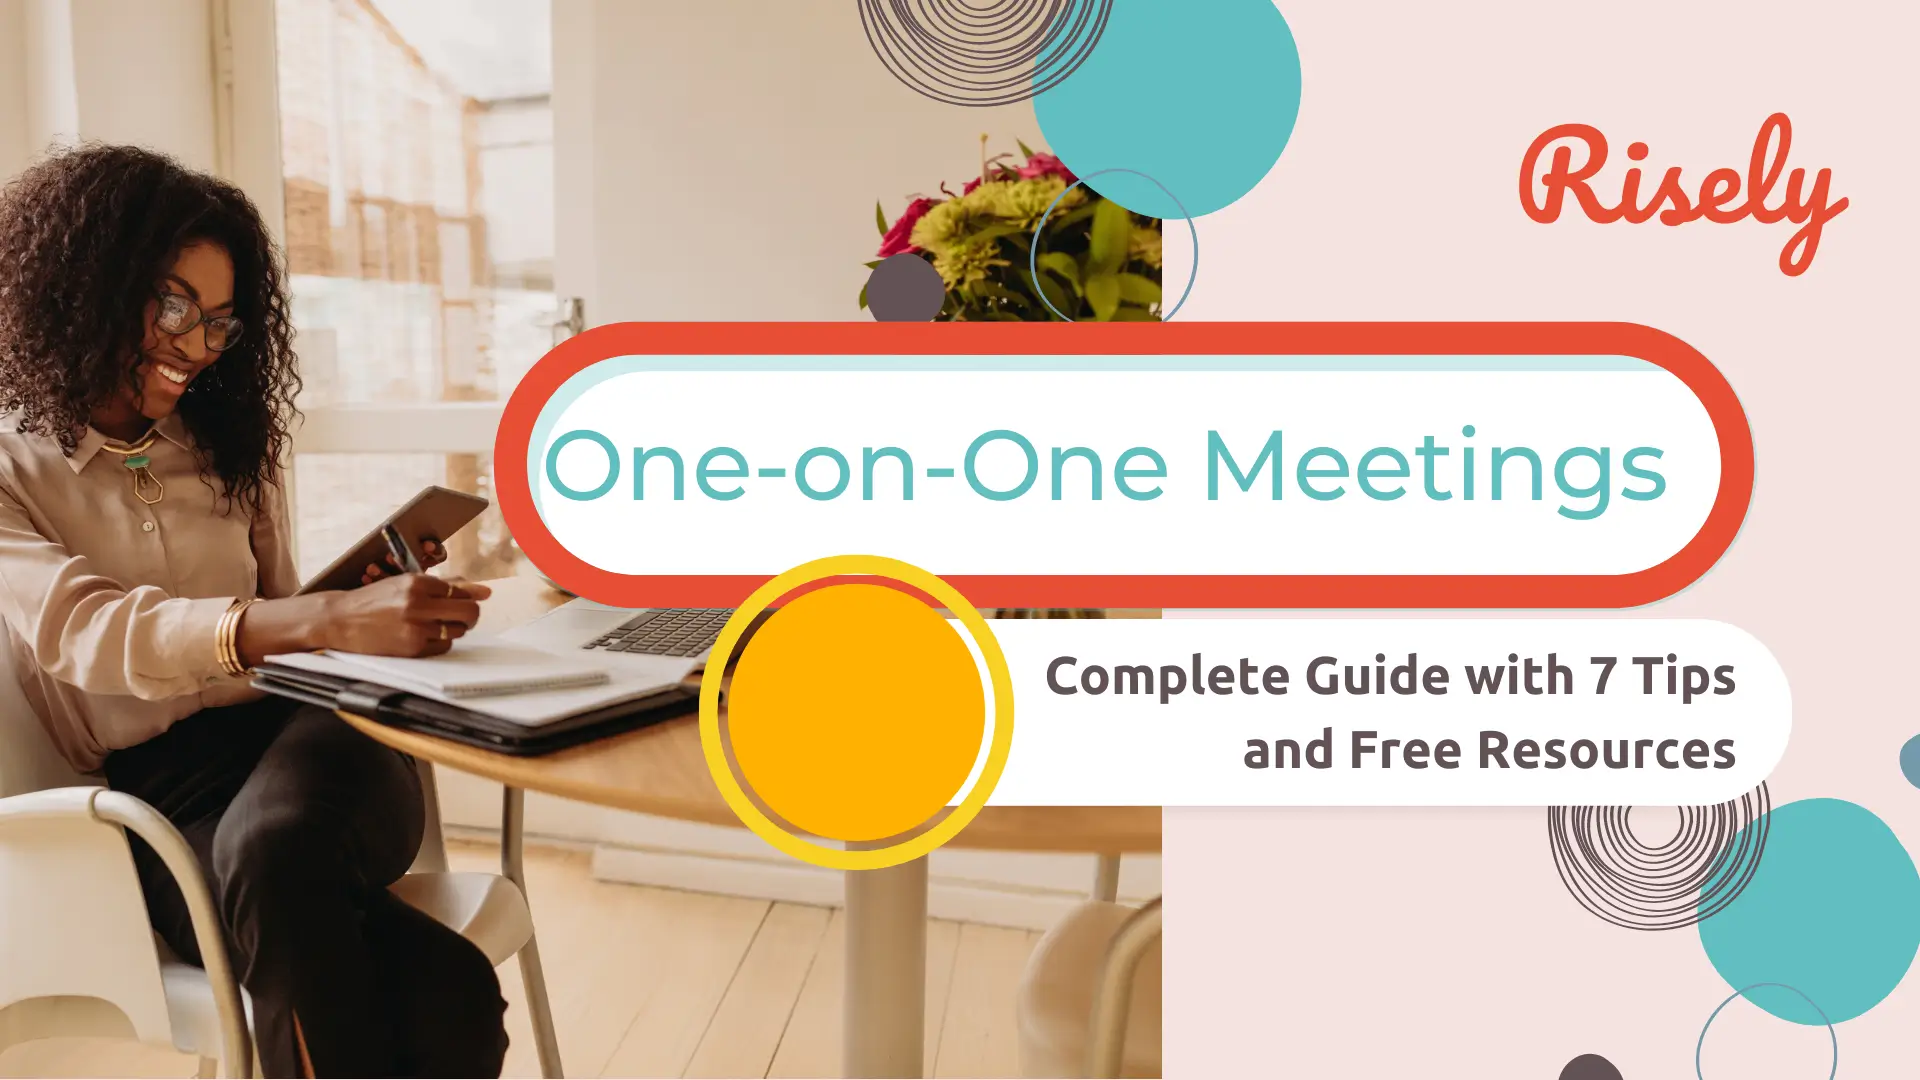 One-on-One Meetings